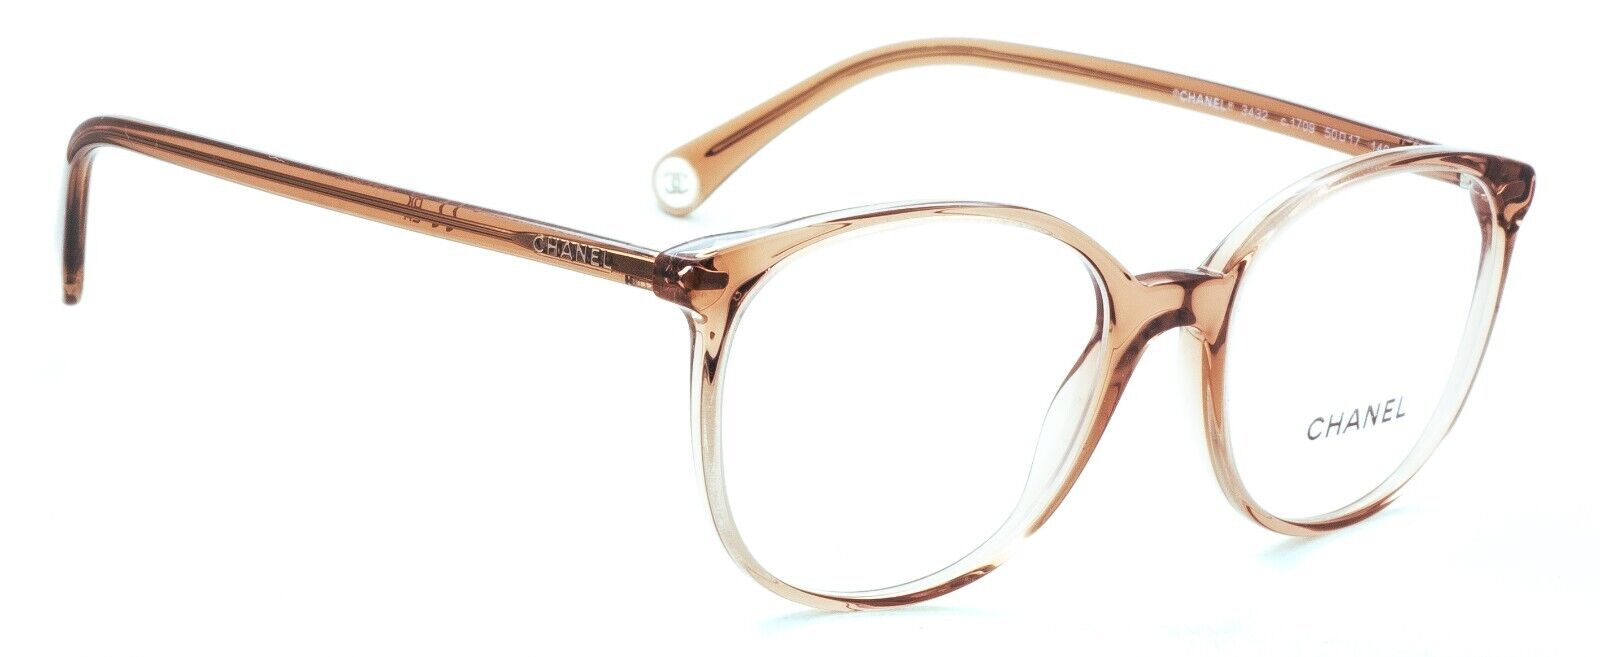 CHANEL 3432 c.1709 50mm Eyewear FRAMES Eyeglasses RX Optical Glasses - New  Italy - GGV Eyewear